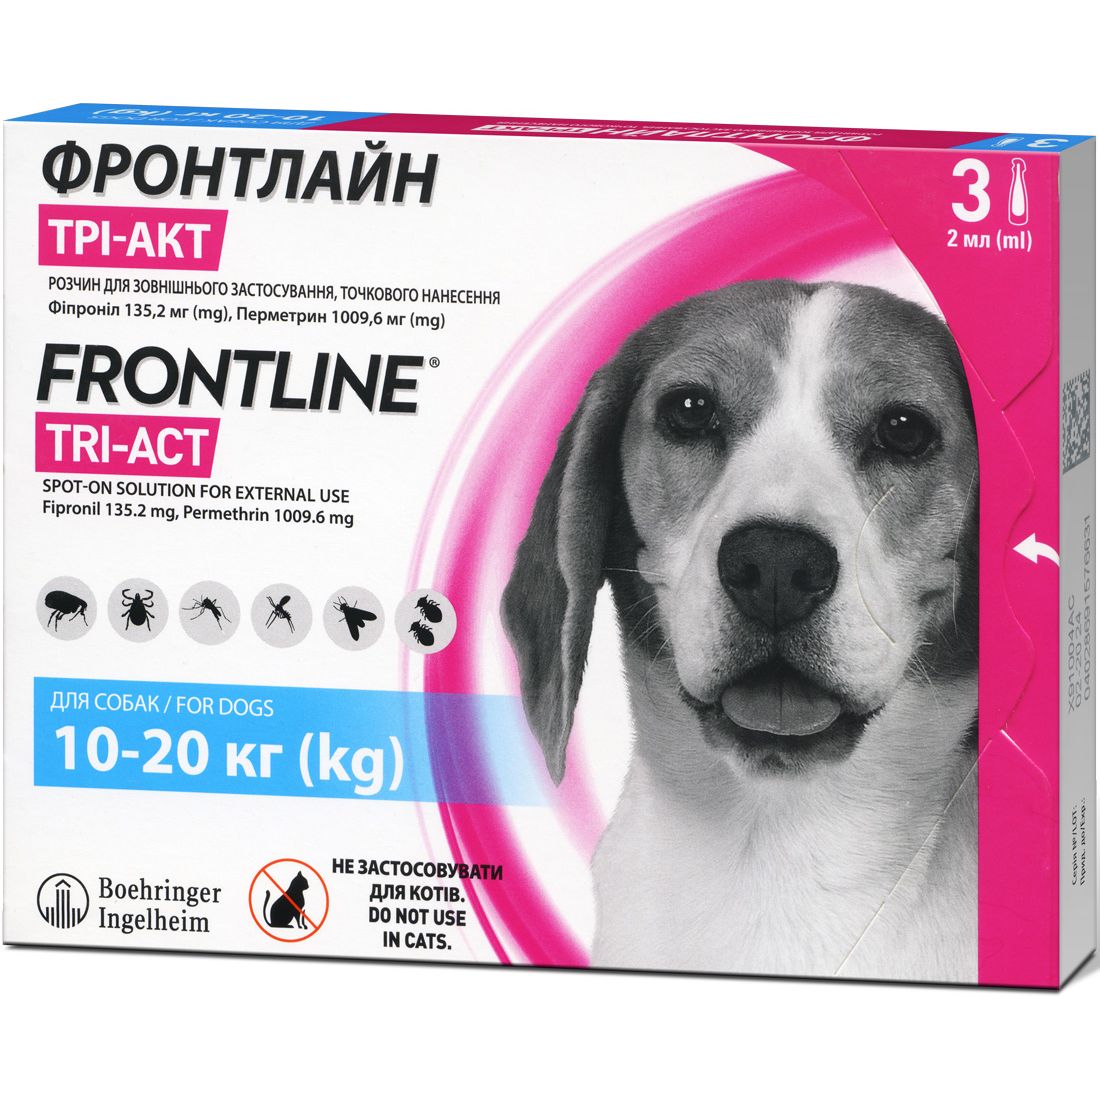 Краплі Boehringer Ingelheim Frontline Tri-Act від бліх та кліщів для собак 10-20 кг 6 мл (3 шт. х 2 мл) (159913) - фото 2